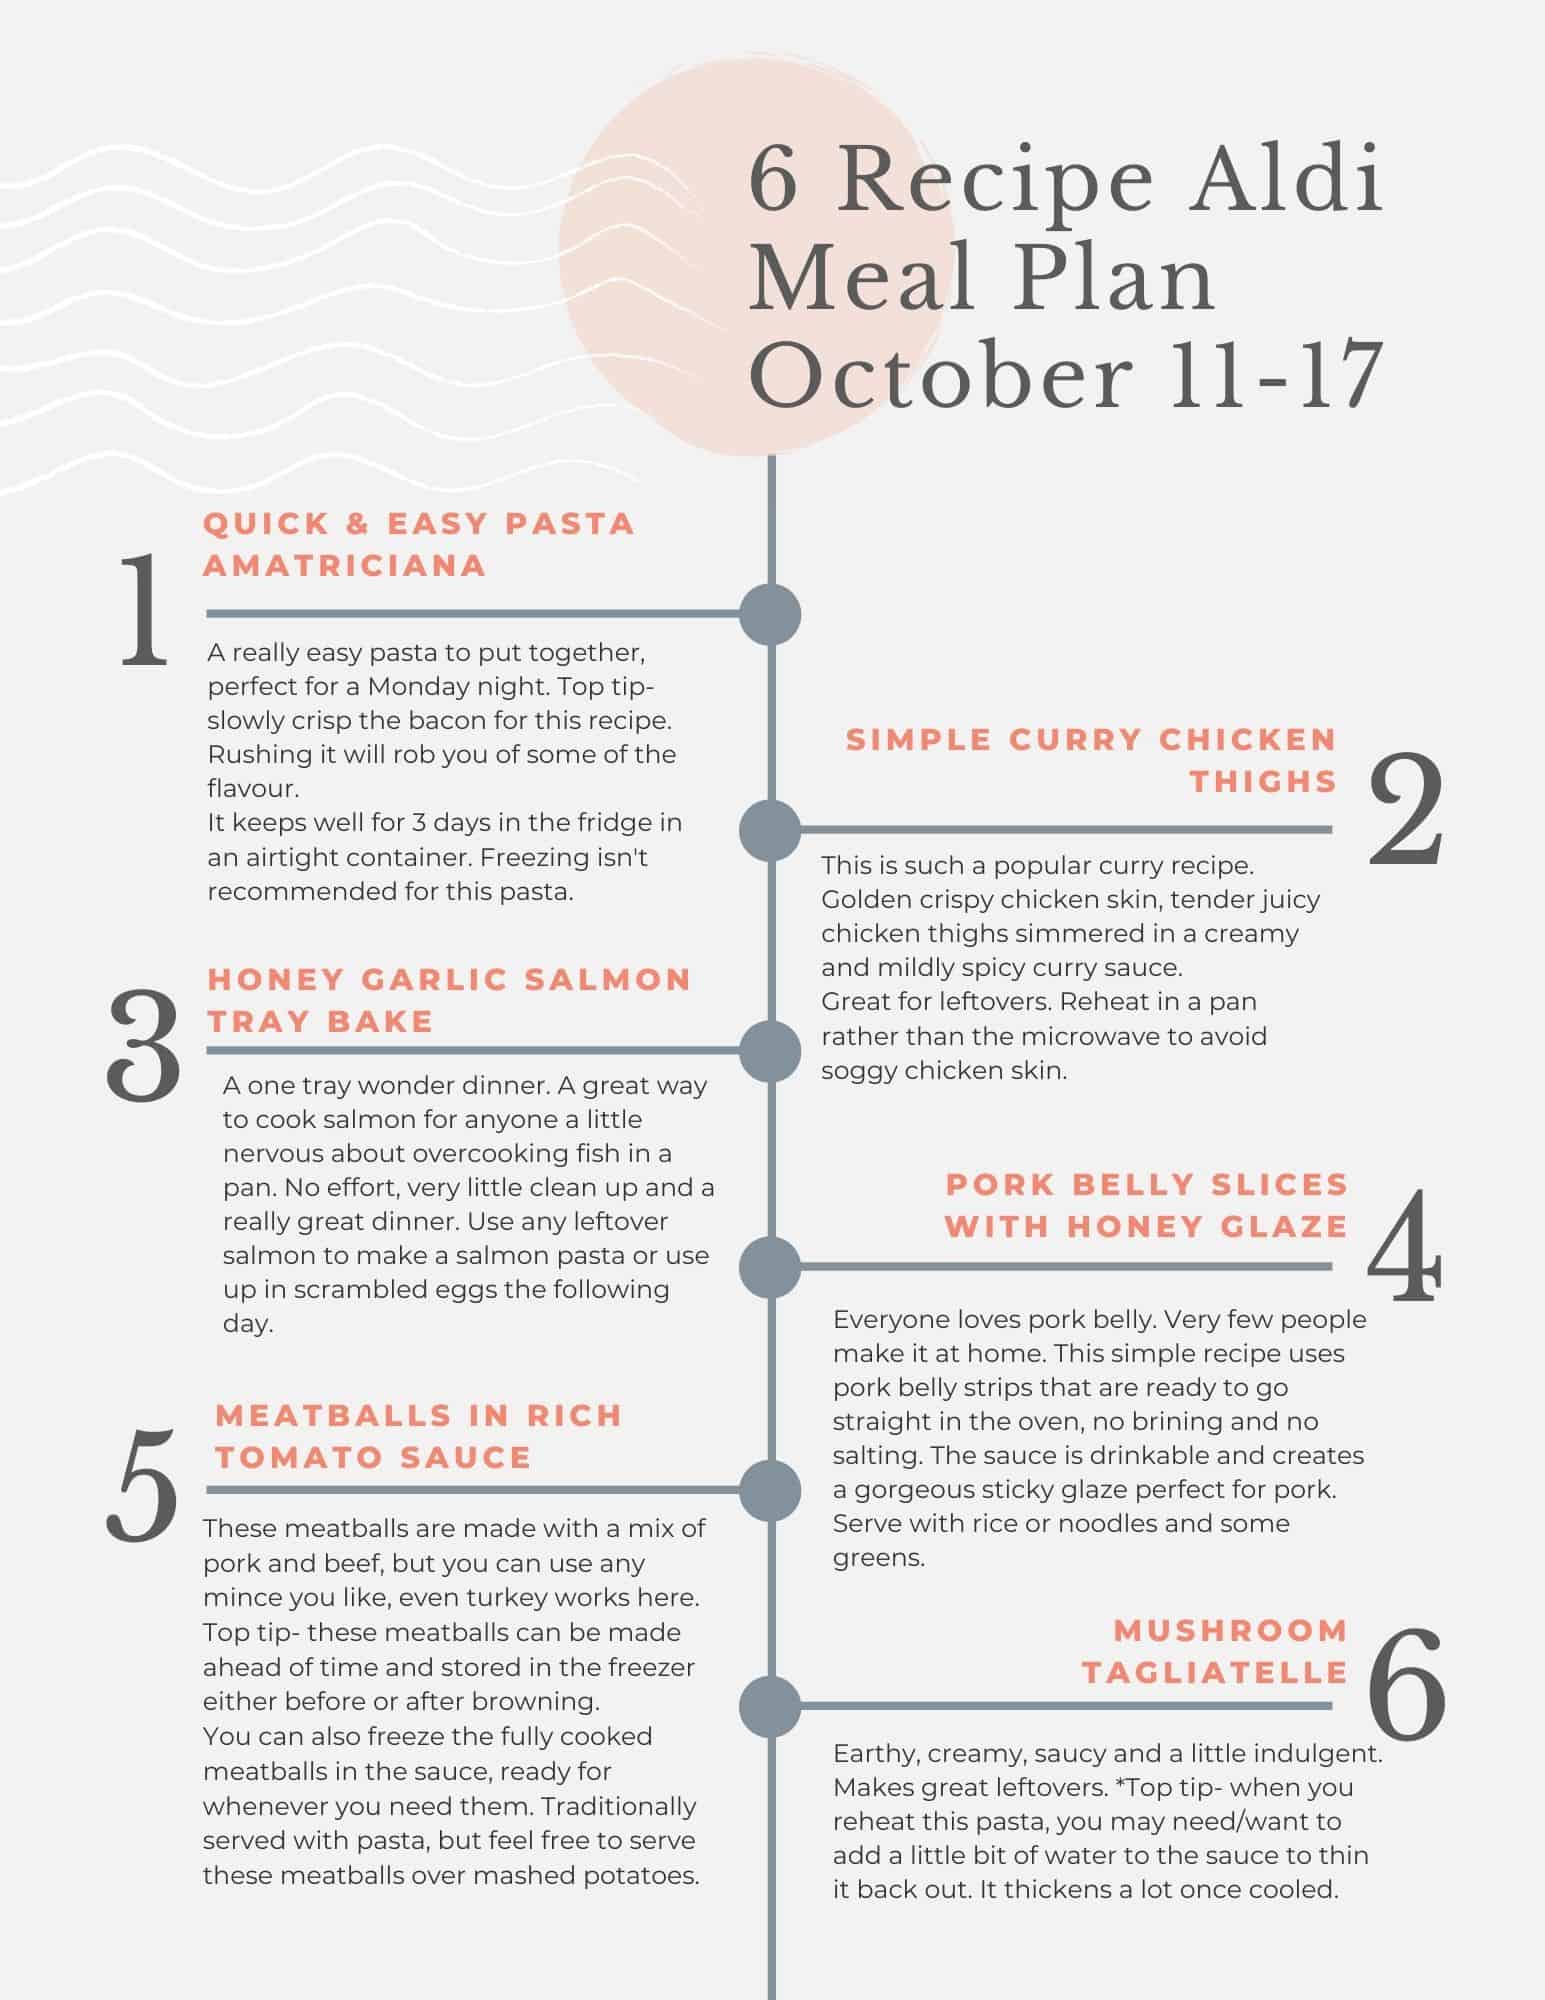 Meal plan tip sheet for Aldi flexible meal plan. 